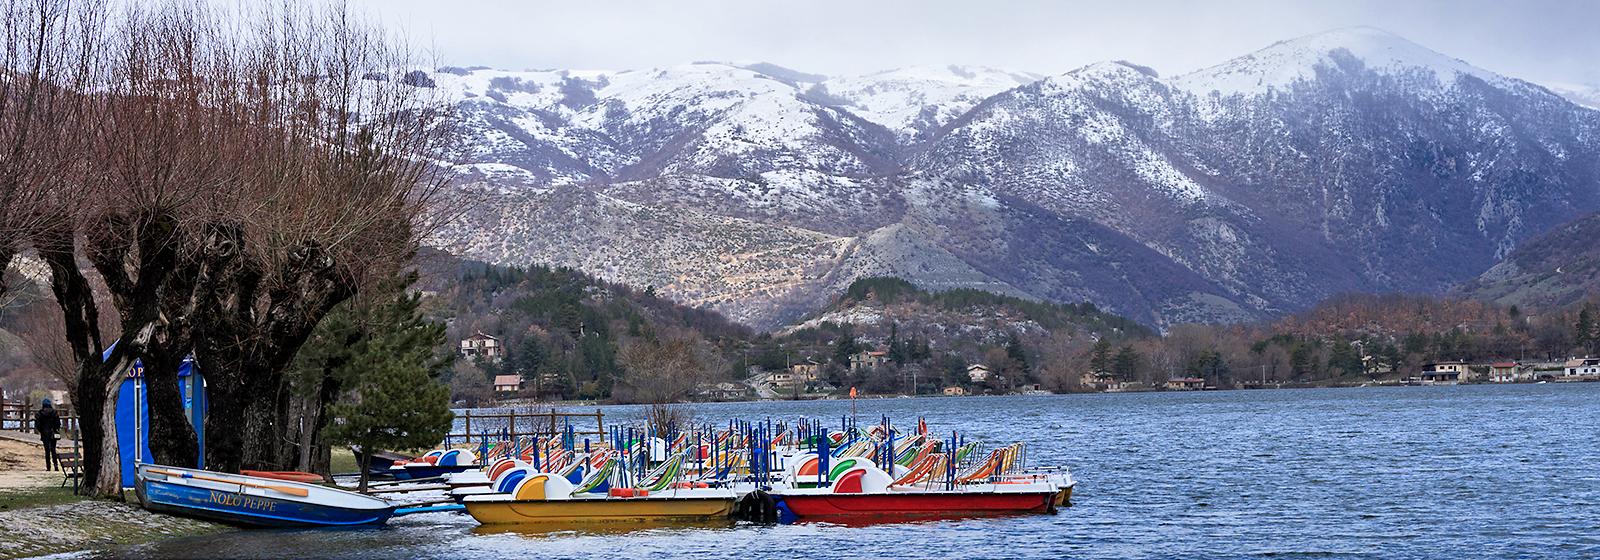 scanno-lake-tourist-resort-abruzzo-italy.jpg